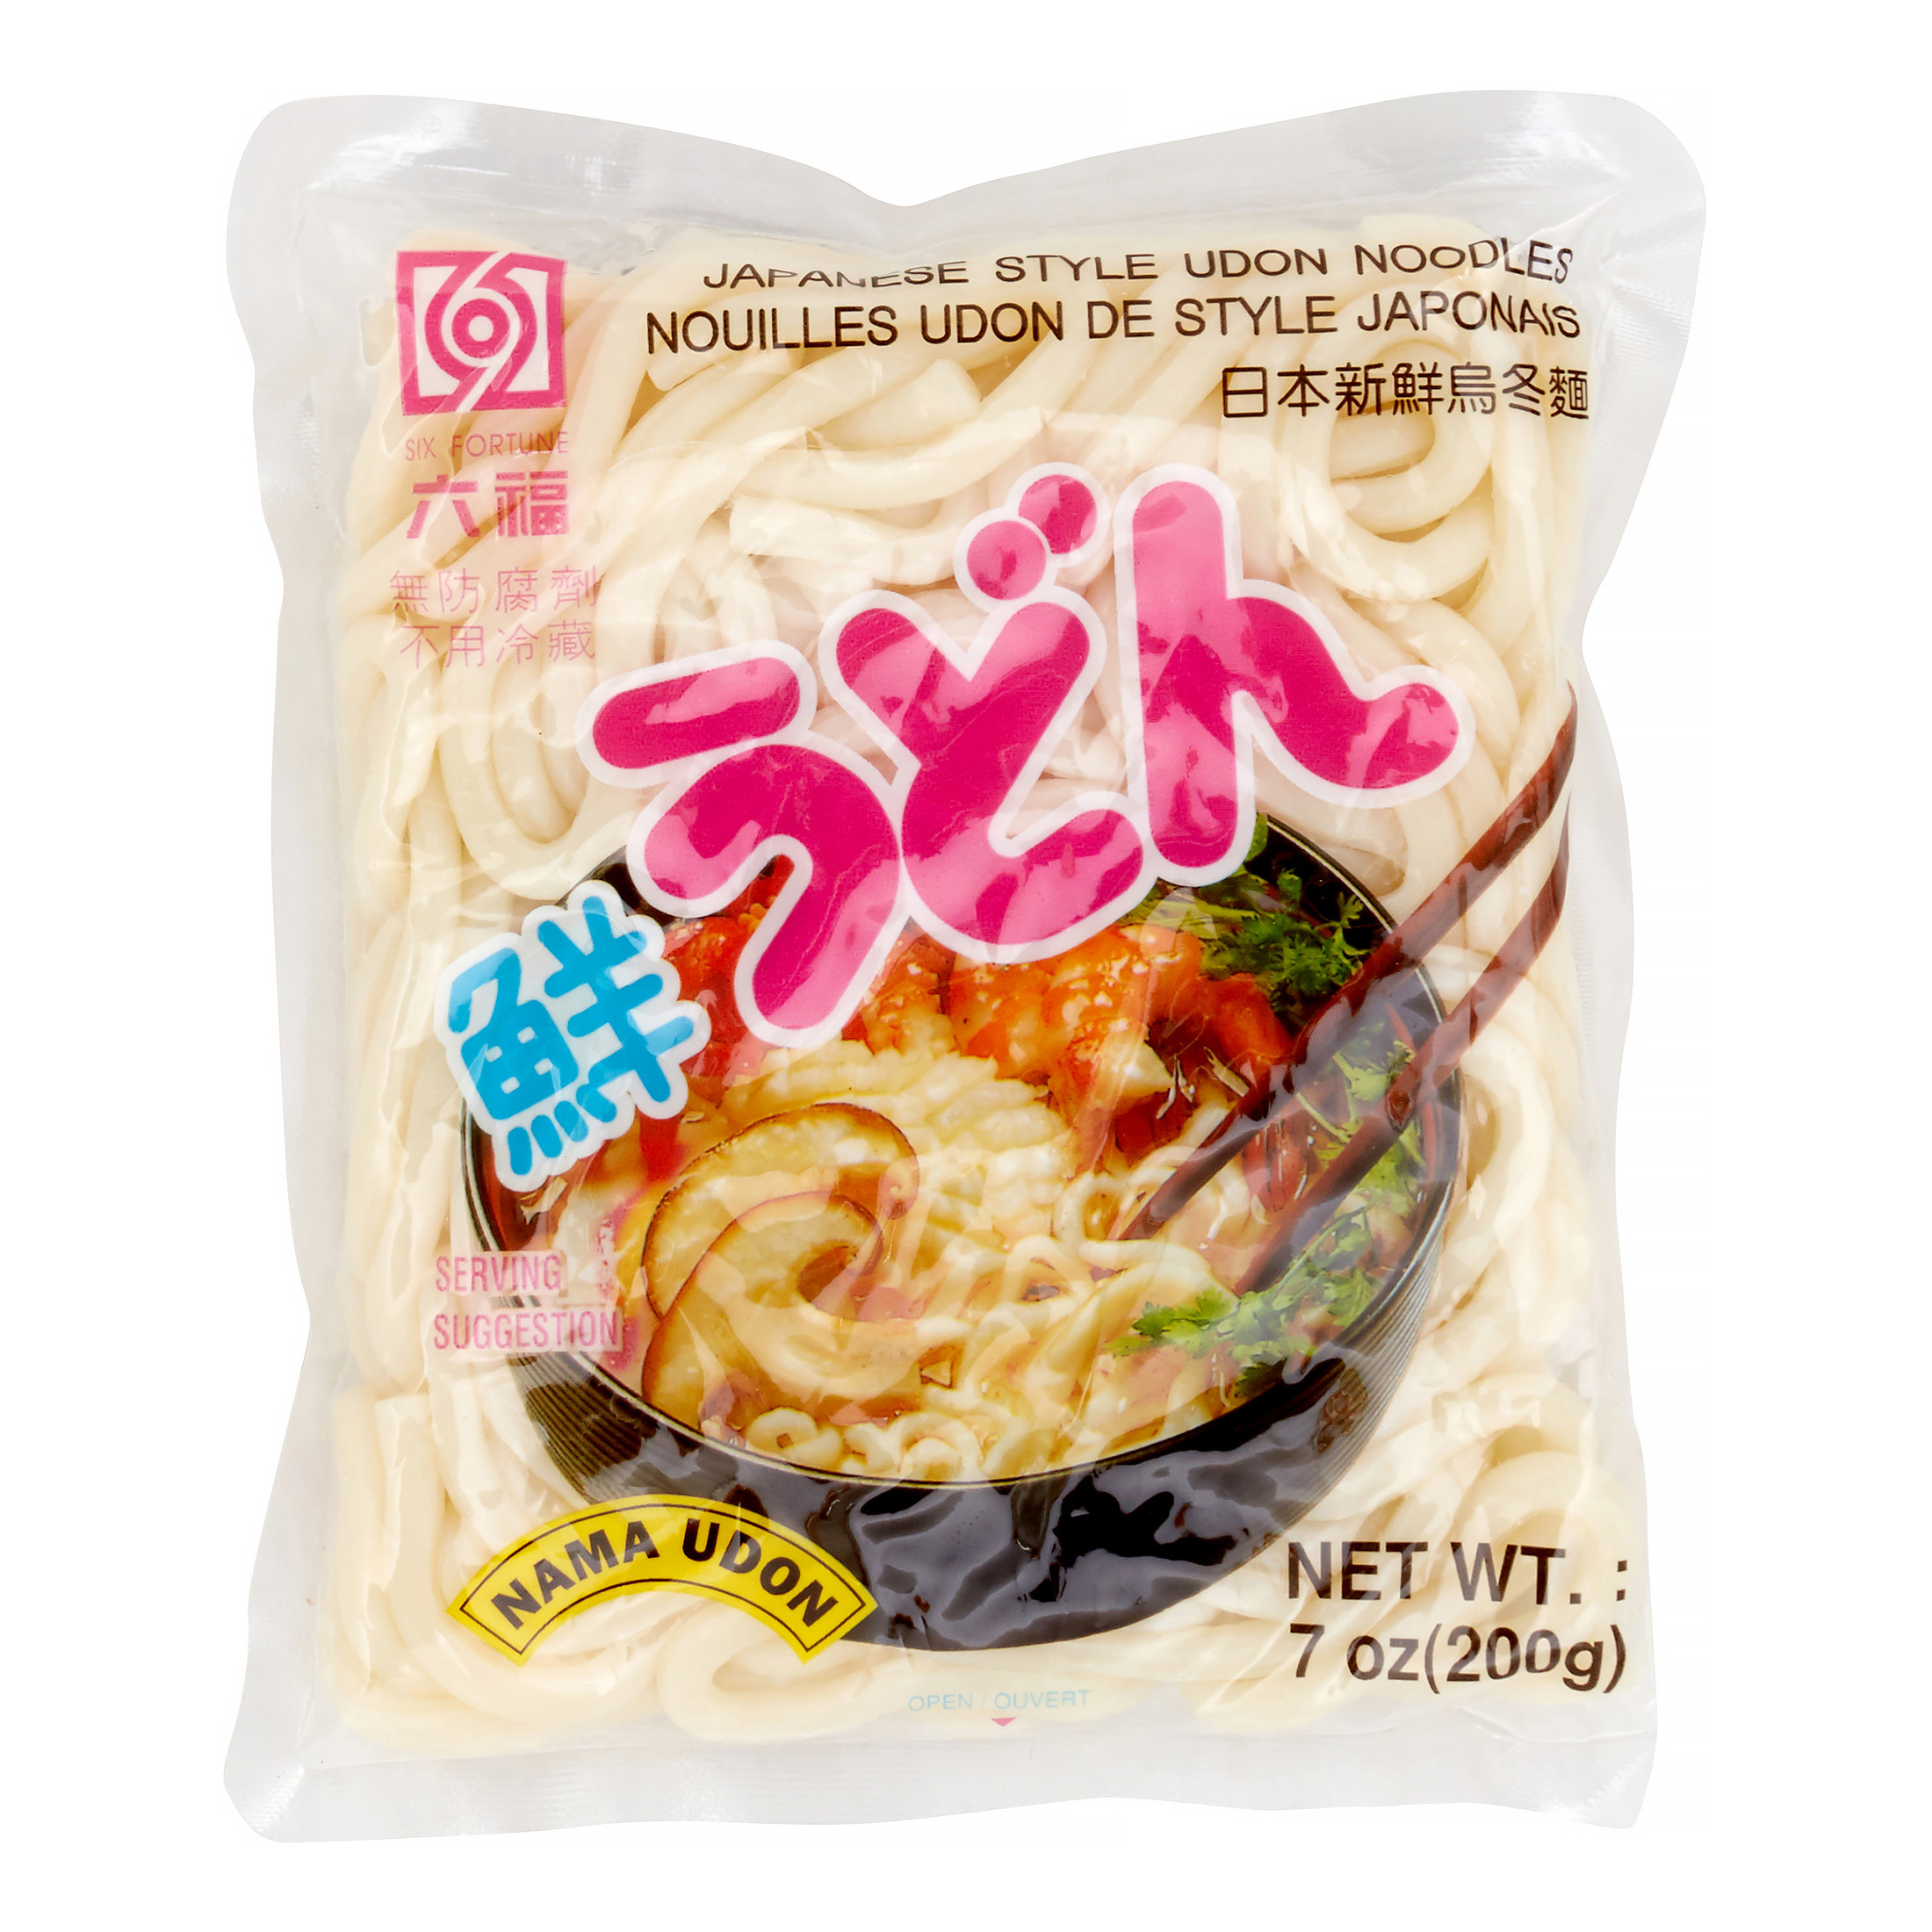 Udon Noodles Walmart
 6 Fortune Nama Udon noodle 7 05 Ounce Walmart